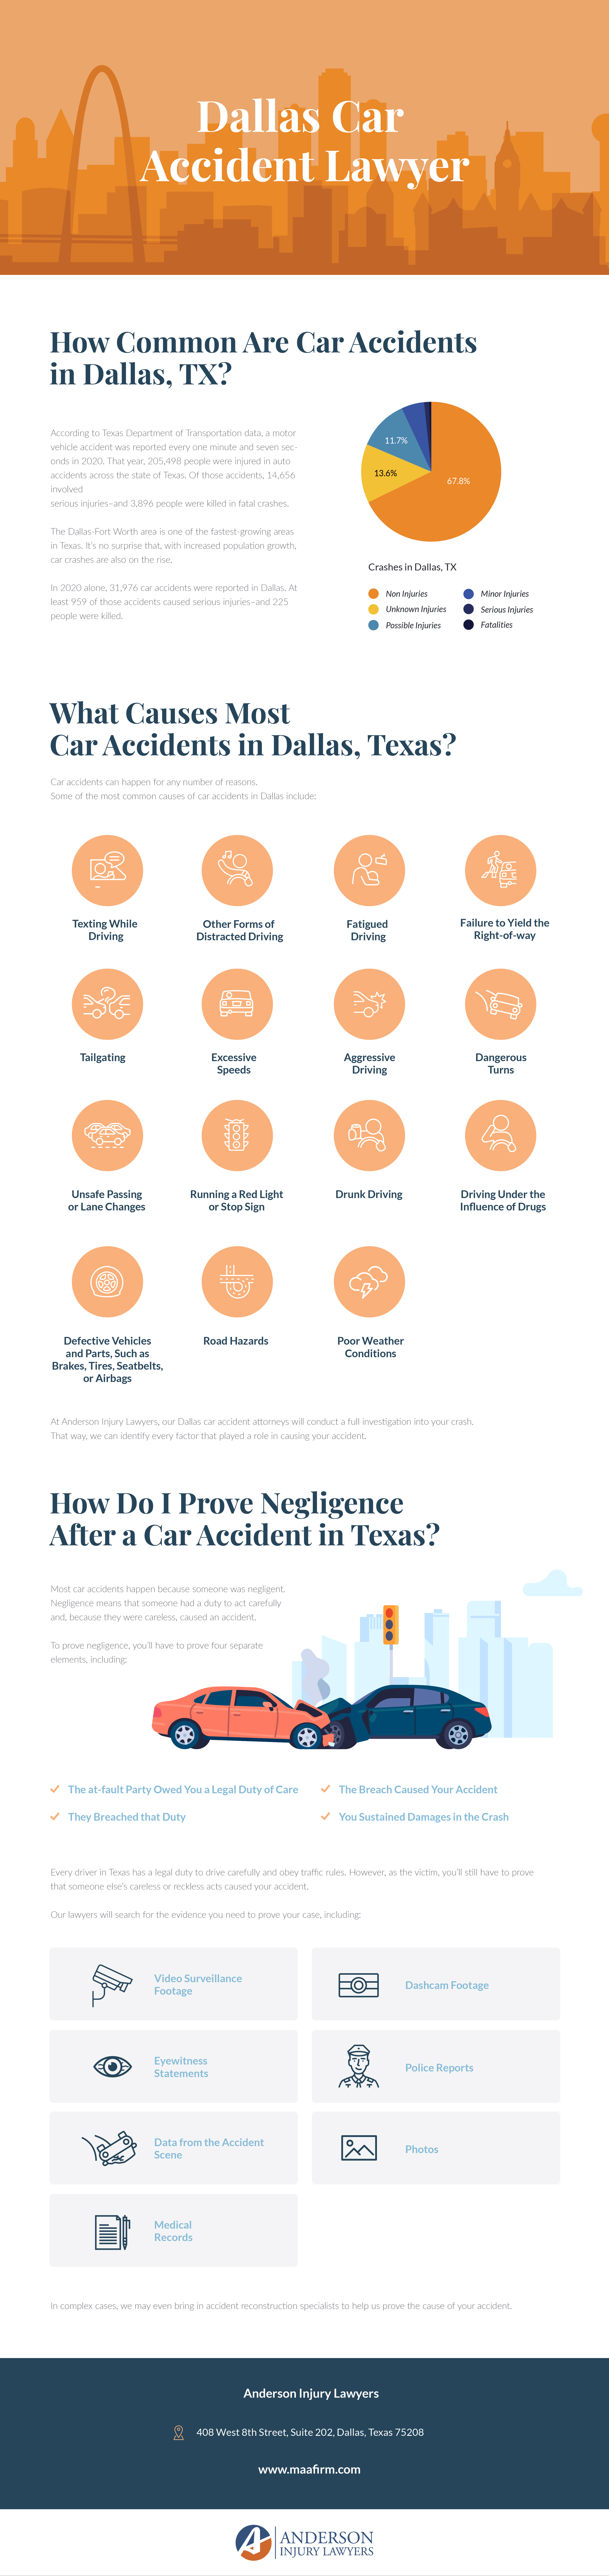 Dallas Car Accident Infographic